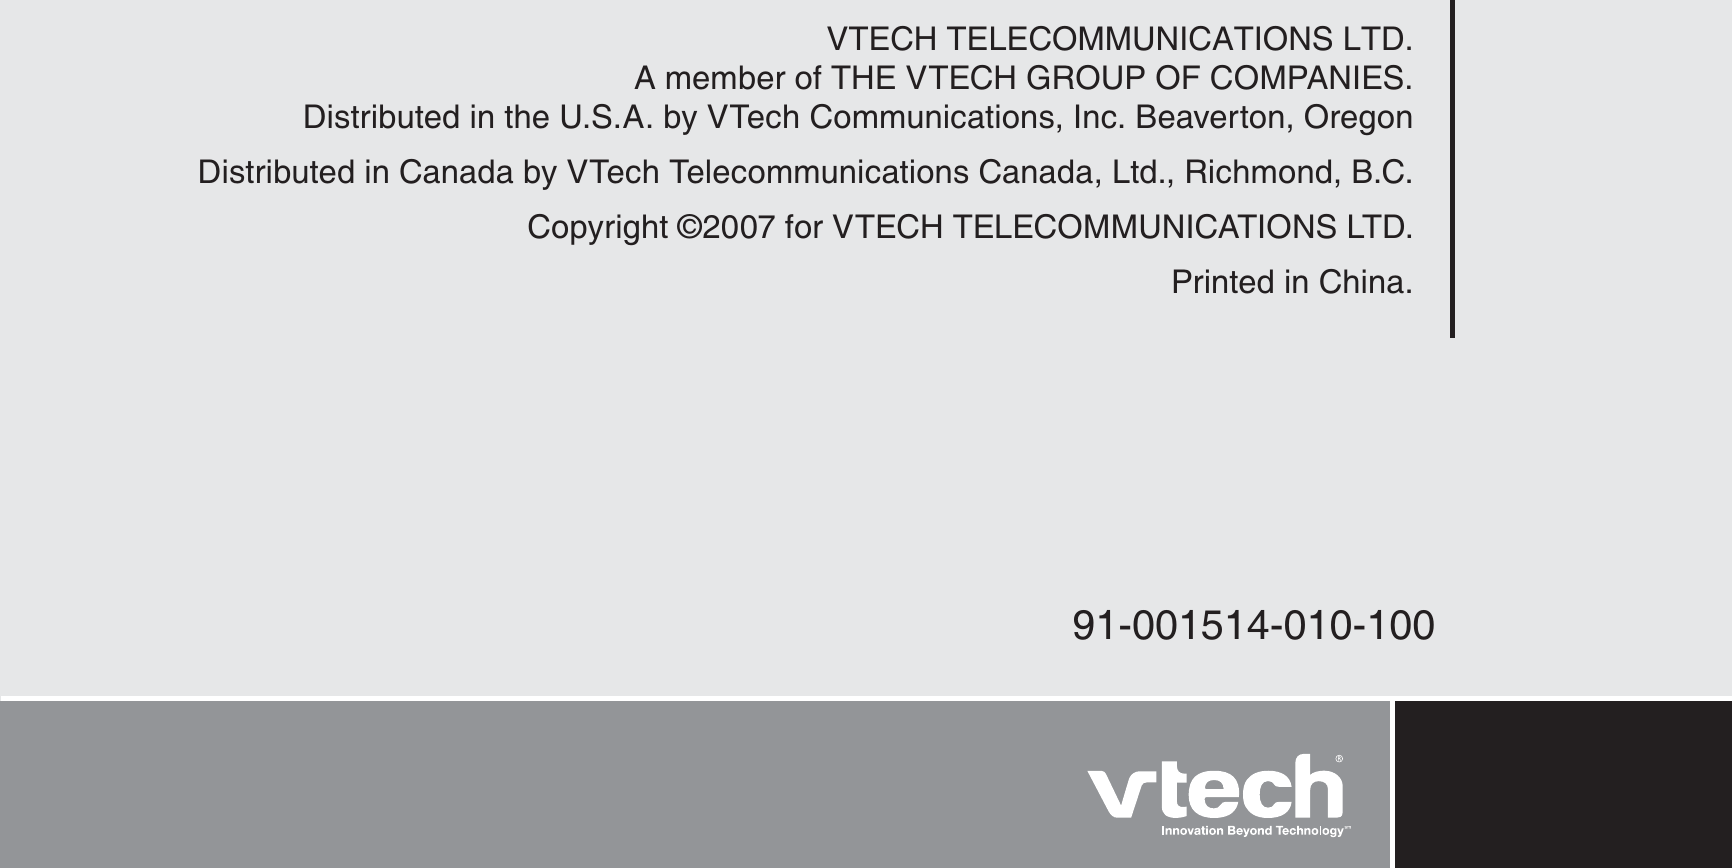 VTECH TELECOMMUNICATIONS LTD.A member of THE VTECH GROUP OF COMPANIES.Distributed in the U.S.A. by VTech Communications, Inc. Beaverton, OregonDistributed in Canada by VTech Telecommunications Canada, Ltd., Richmond, B.C.Copyright ©2007 for VTECH TELECOMMUNICATIONS LTD.Printed in China.91-001514-010-100